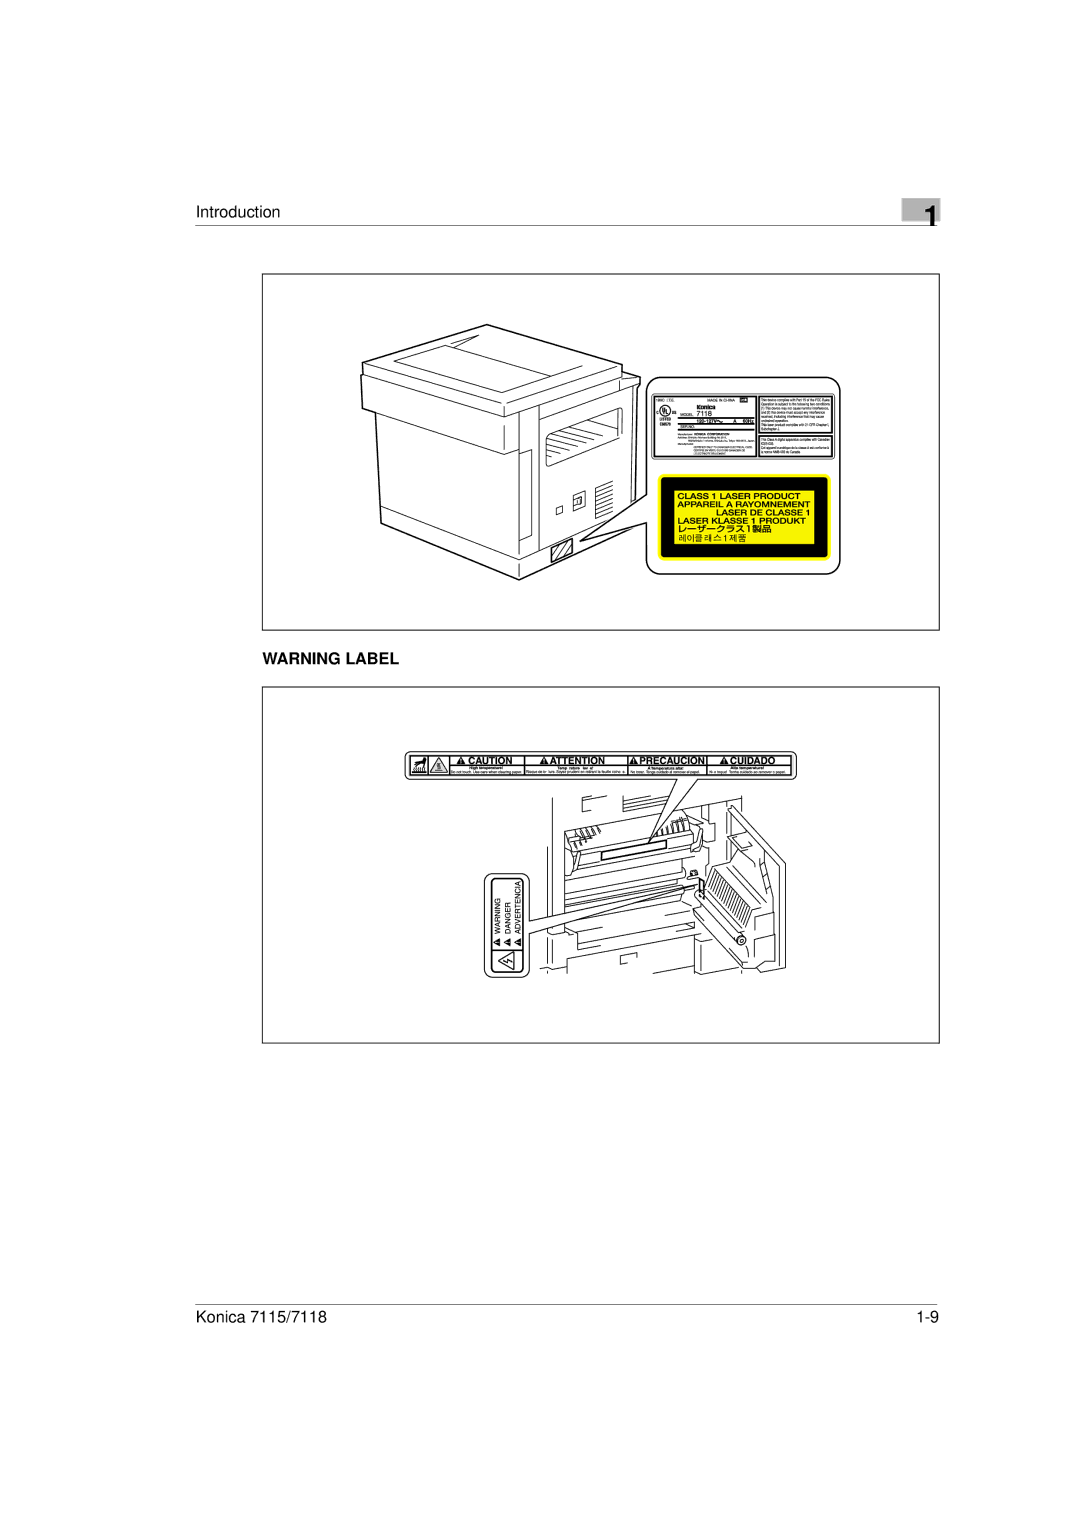 Konica Minolta Printer Copier manual Introduction Konica 7115/7118 